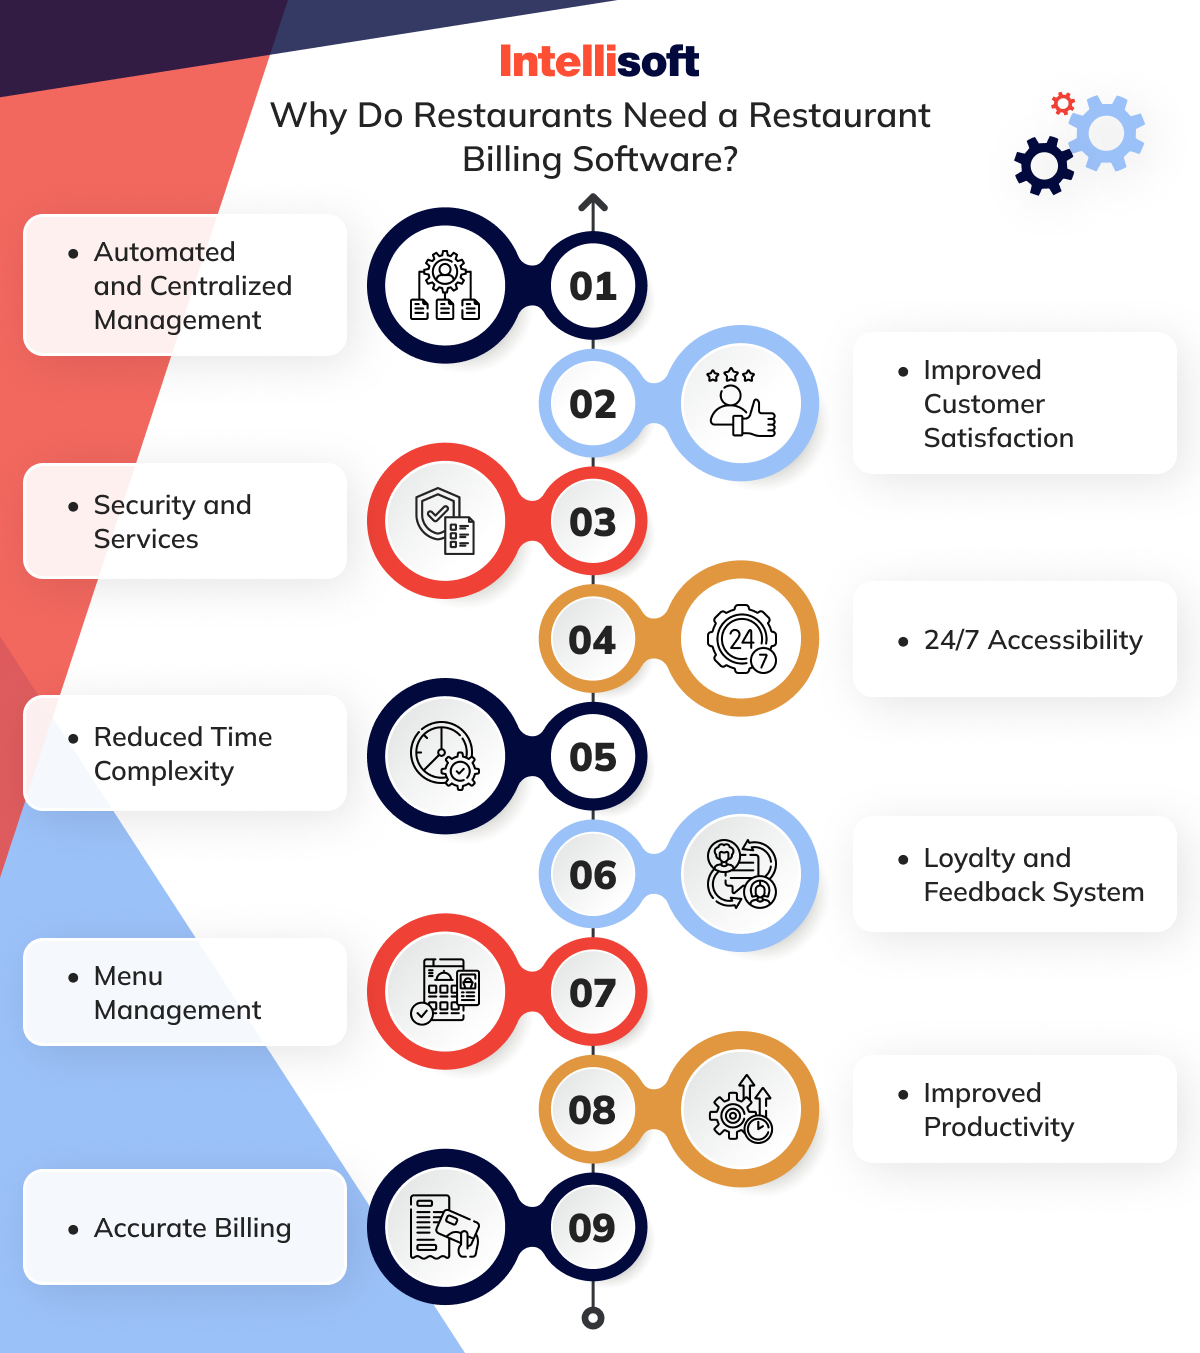 Why Do Restaurants Need a Restaurant Billing Software?